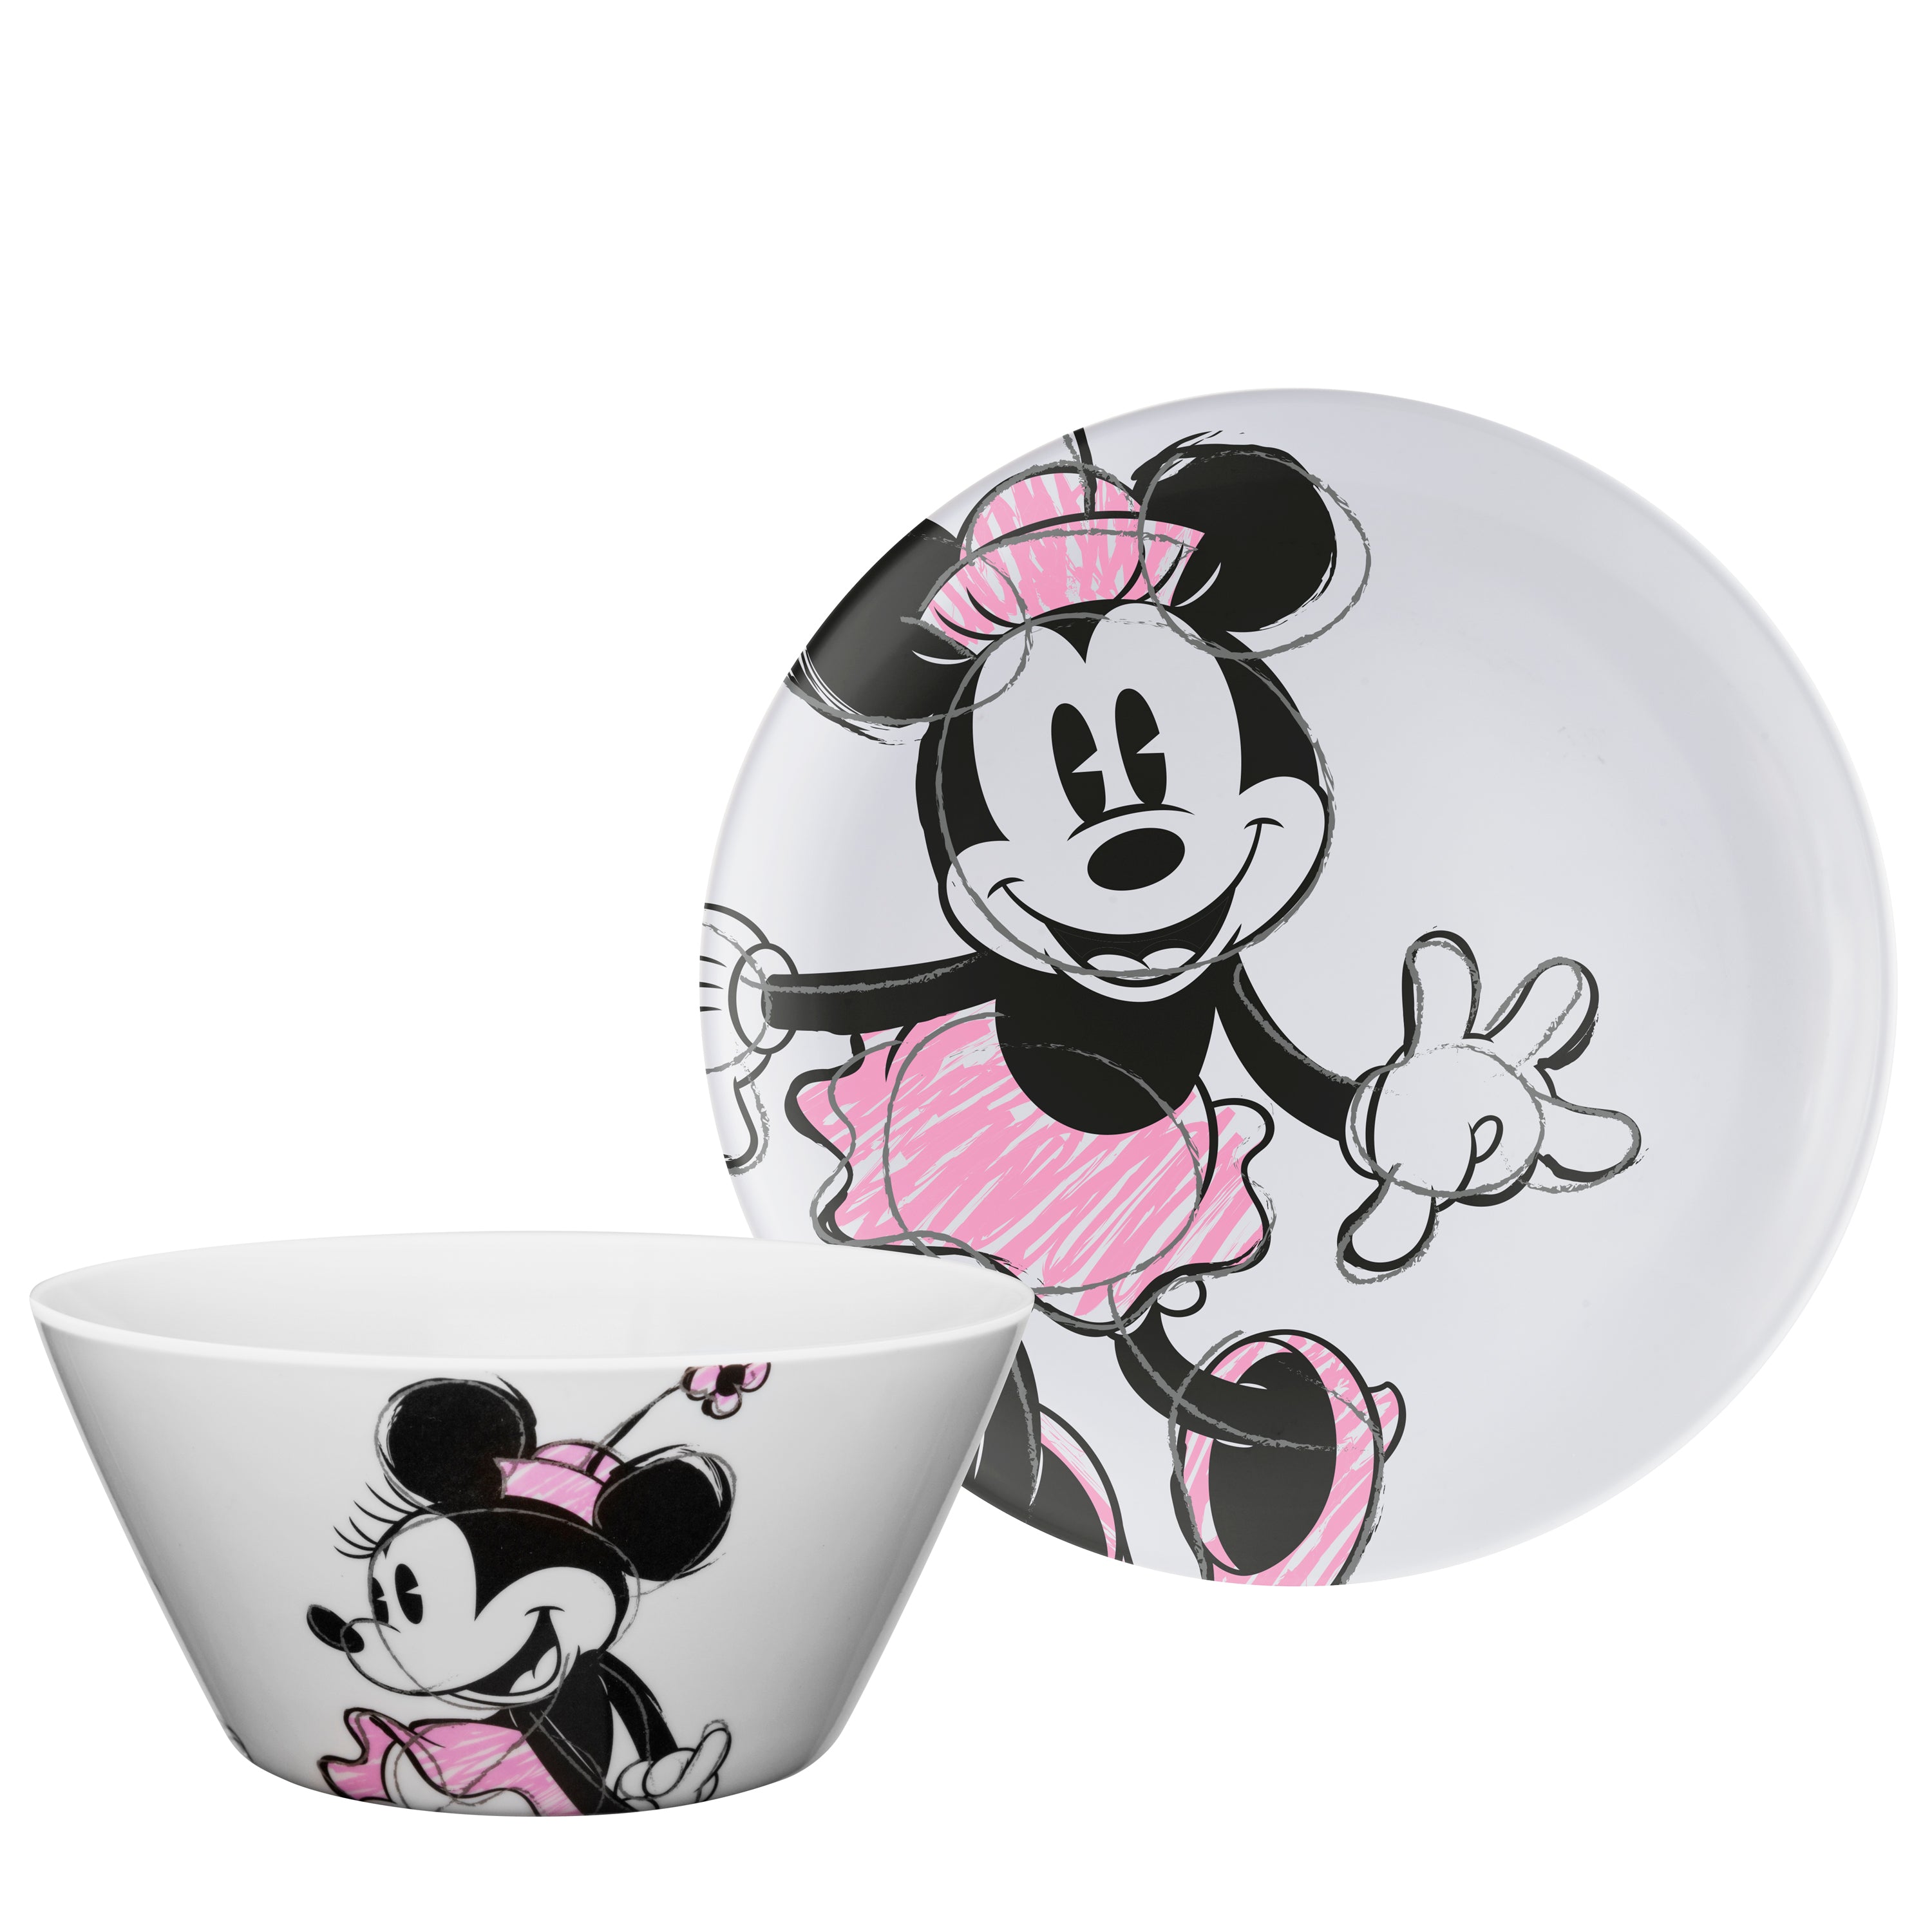 Disney Minnie Mouse Melamine Kids Plate and Bowl Set